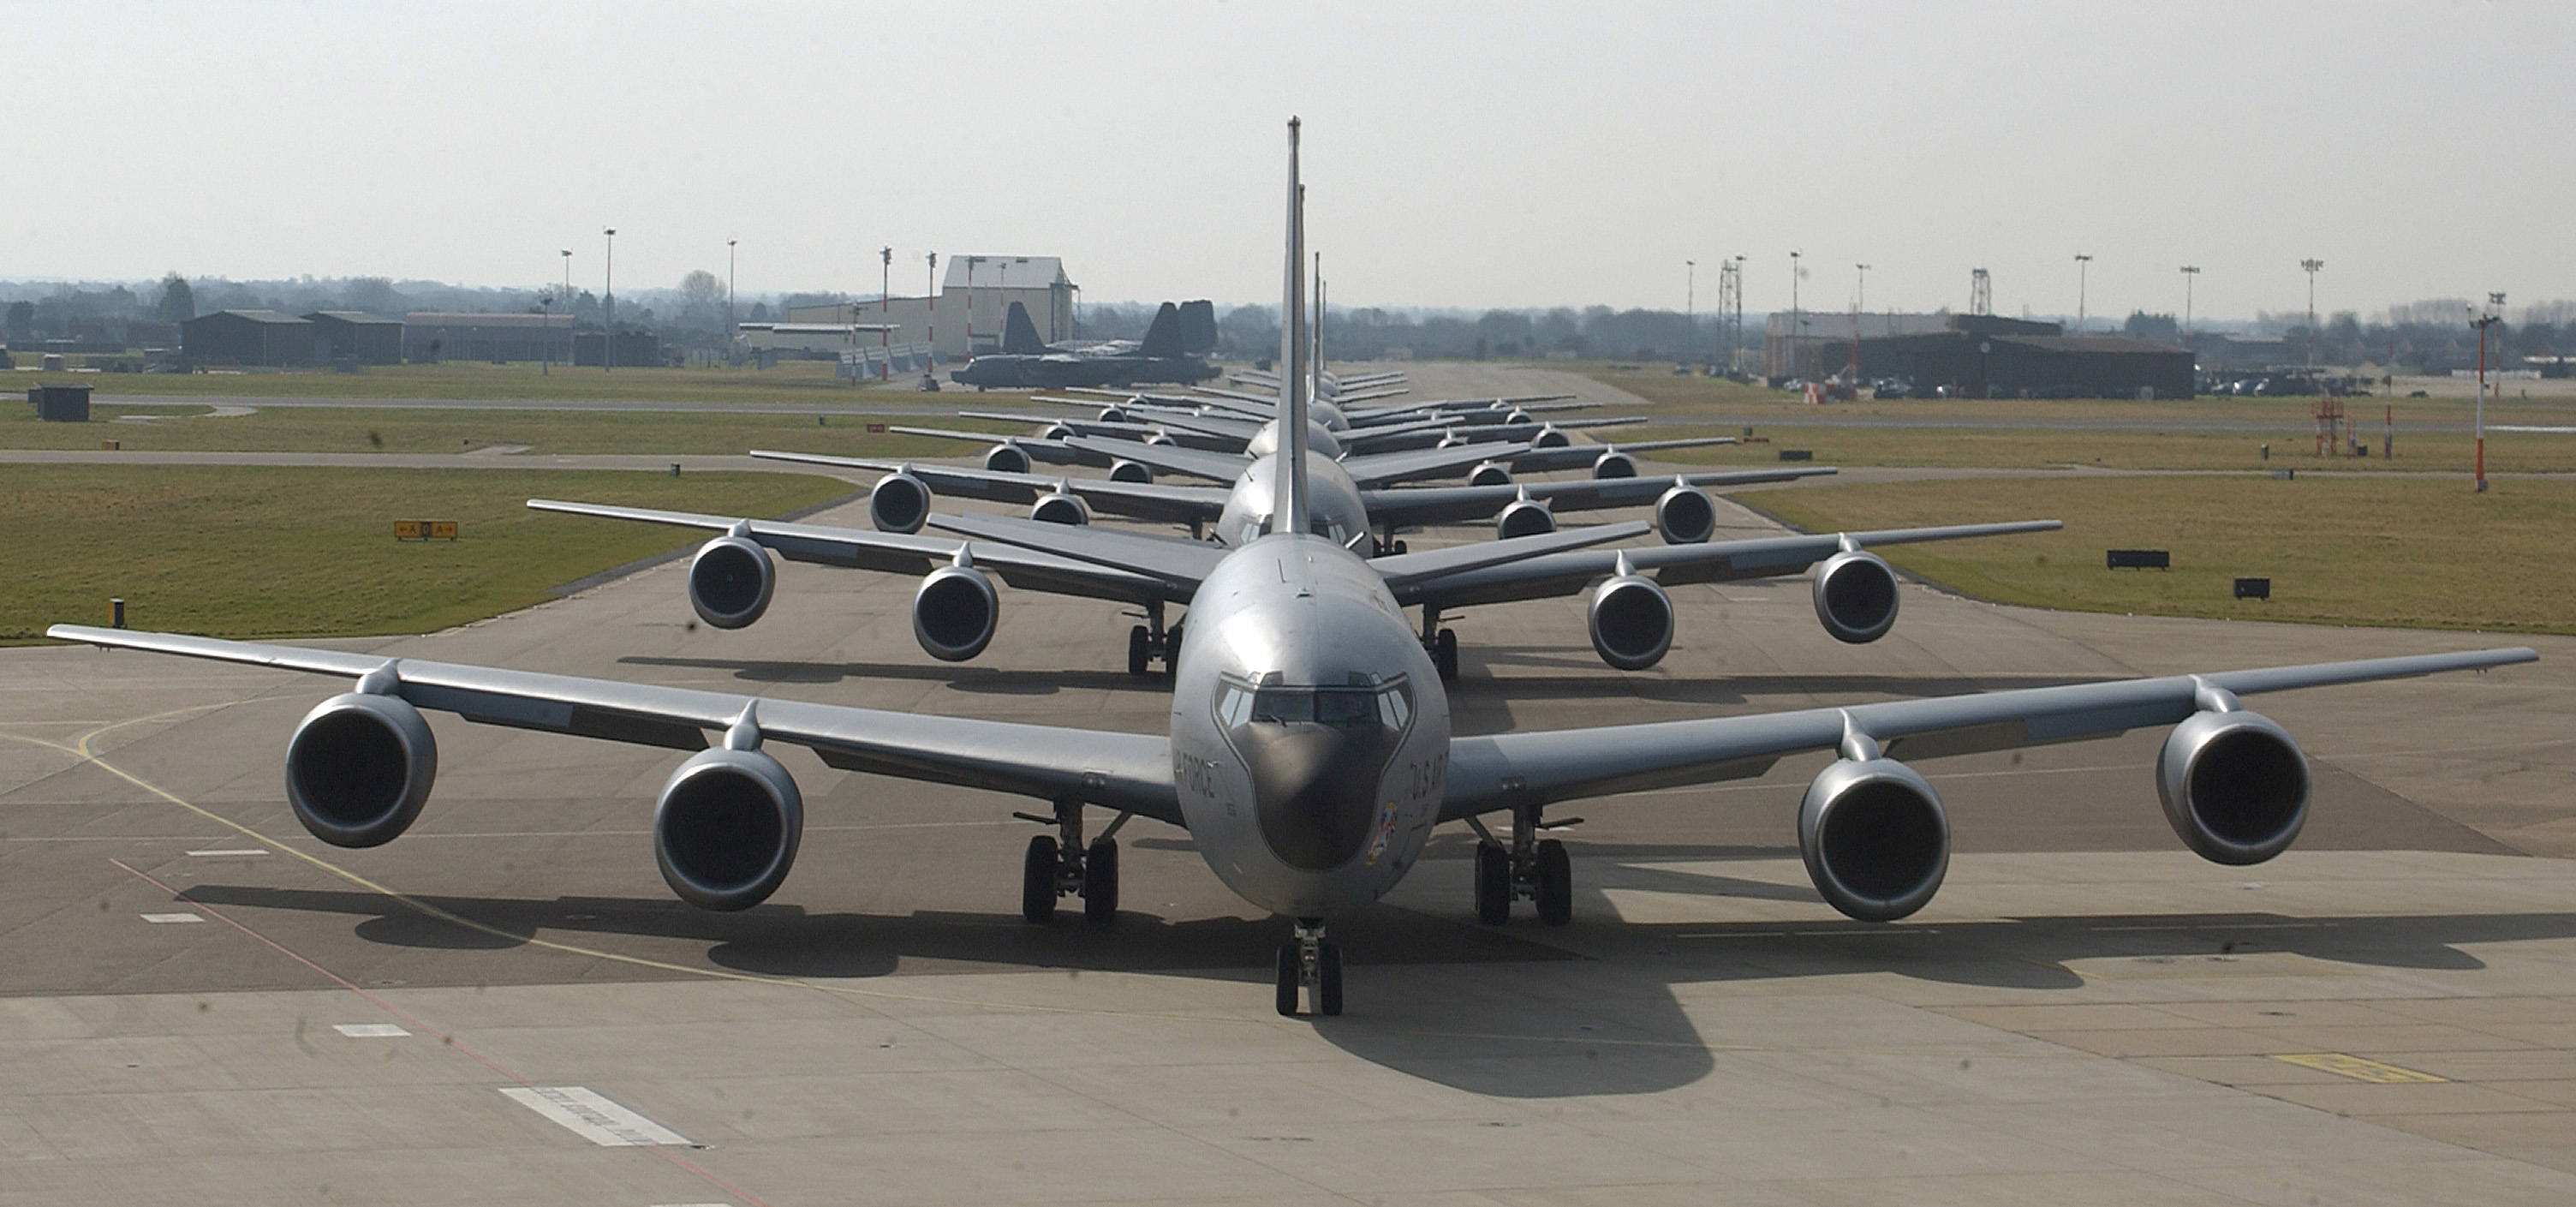 KC-135s lining up at RAF Mildenhall. (USAF photo)